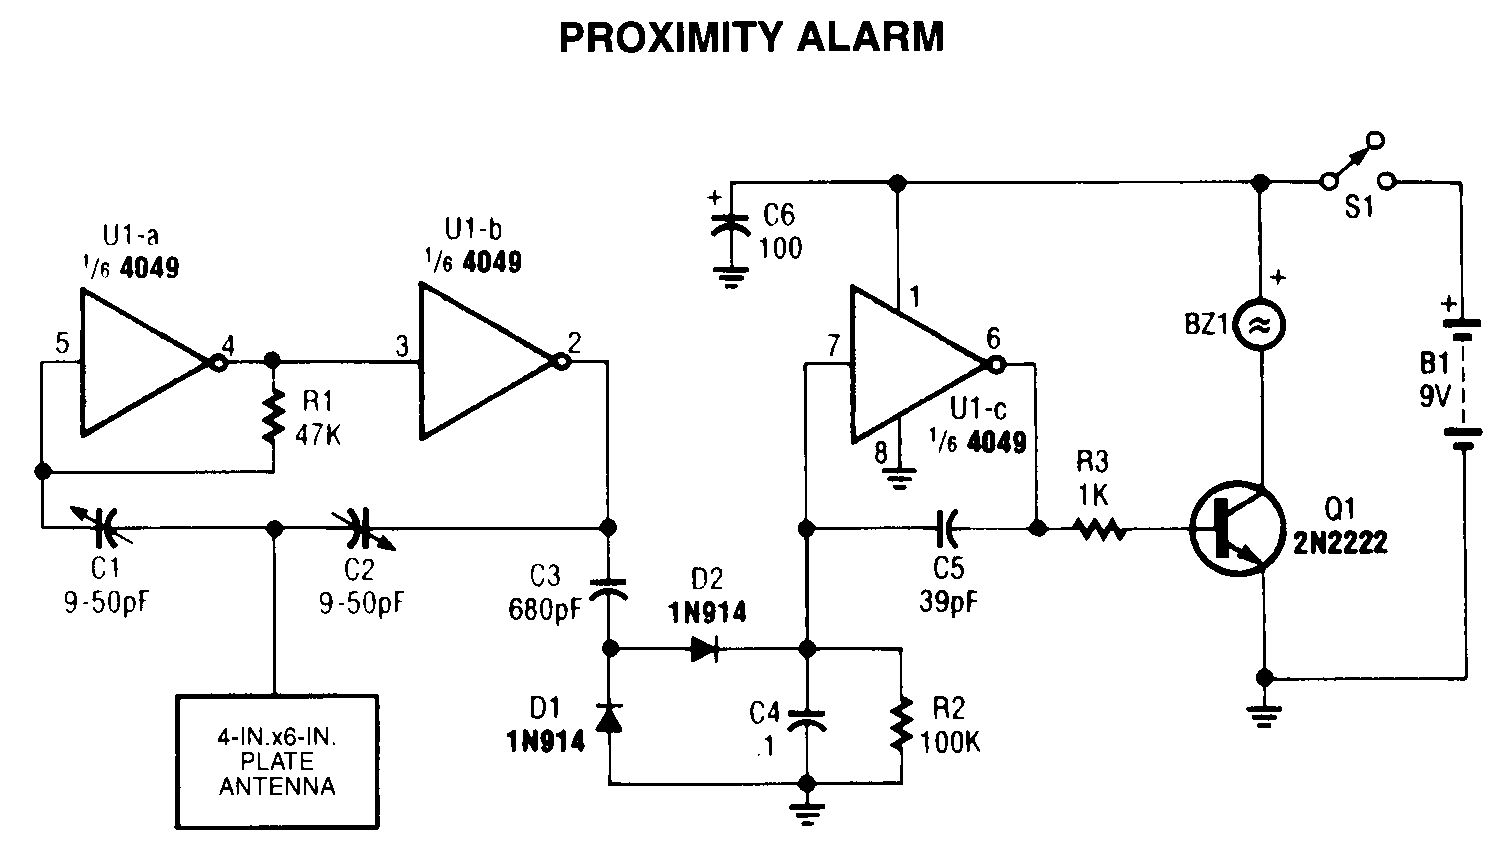 Proximity Alarm Circuit Diagram Project - Alarms ...